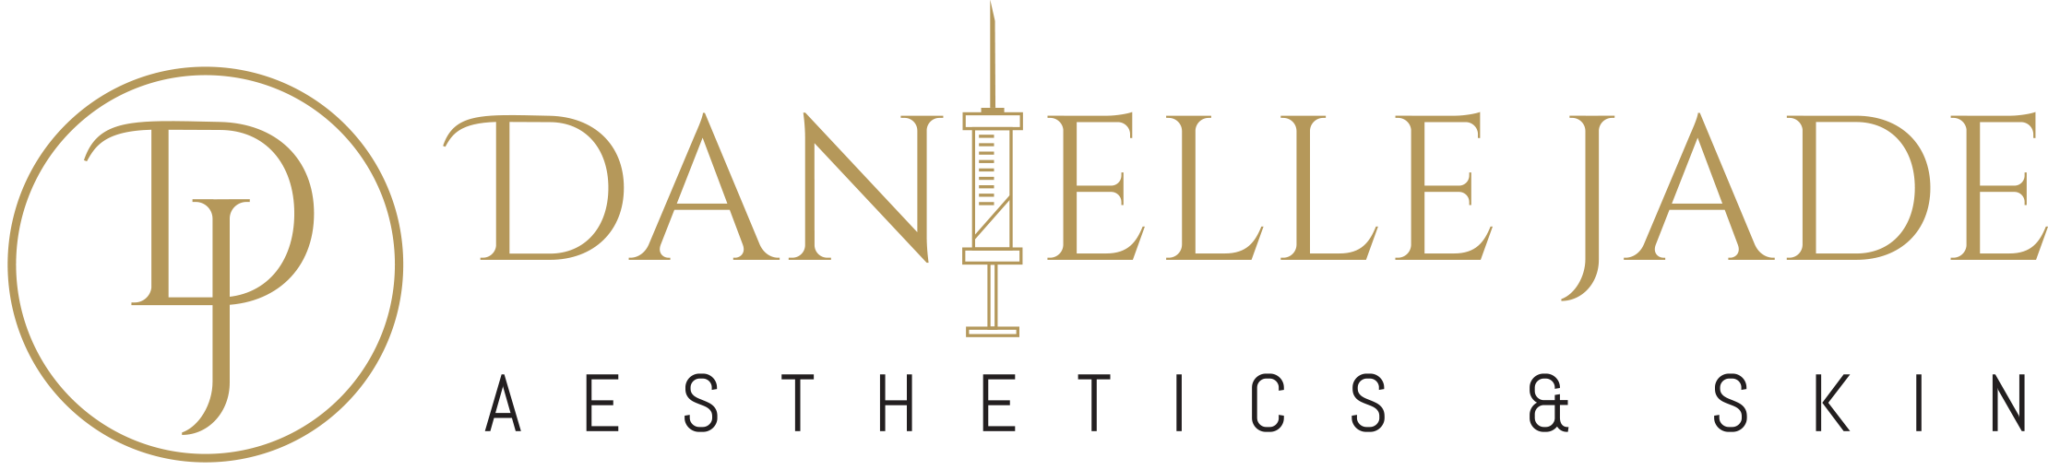 Danielle Jade Aesthetics And Skin logo